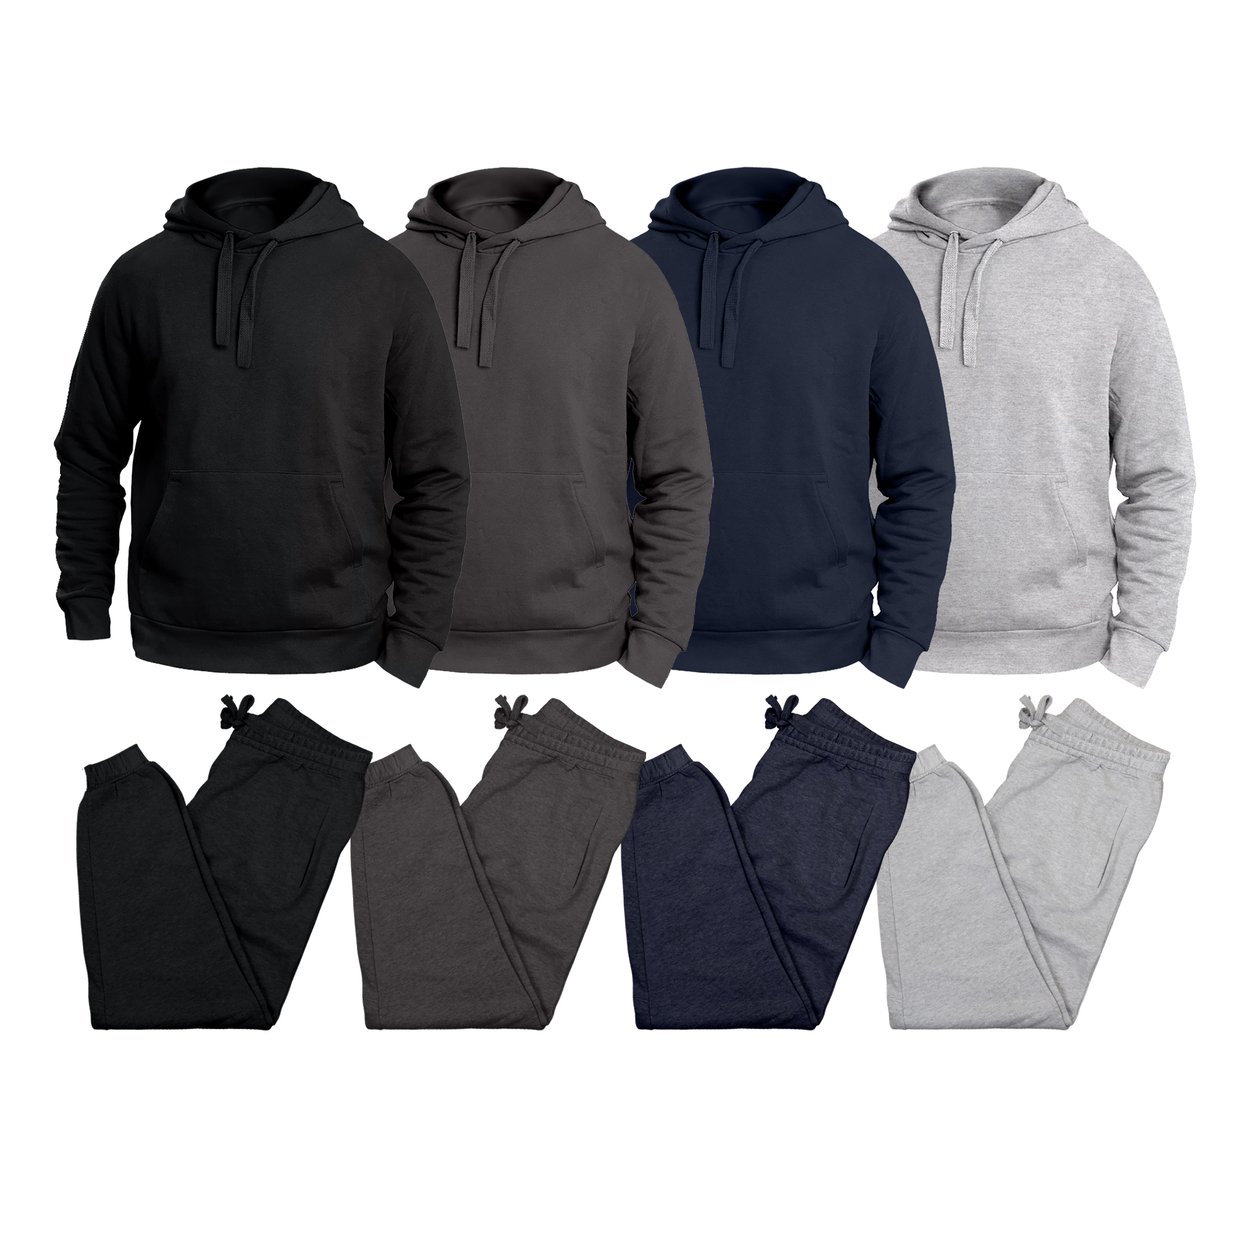 Men's Big & Tall Winter Warm Cozy Athletic Fleece Lined Multi-Pocket Cargo Sweatsuit - Grey, 3xl